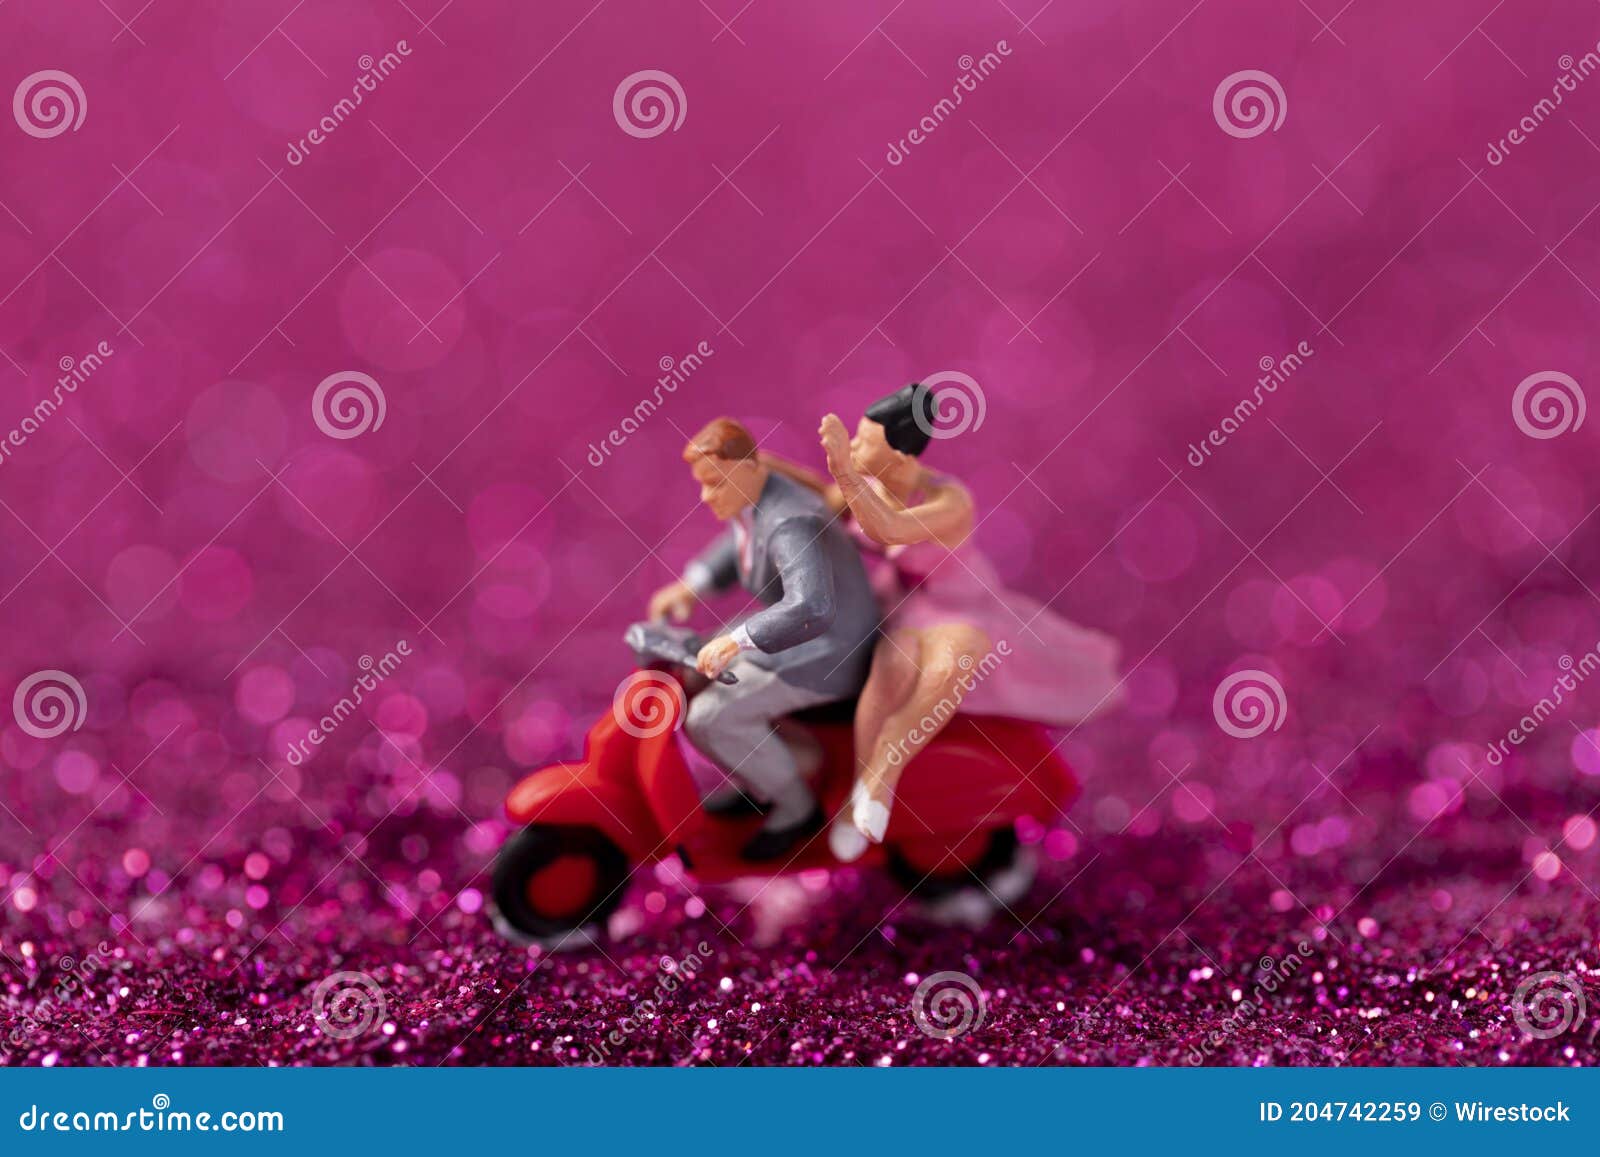 Creative Shot of Valentine S Day Romantic Doll Couple Stock Image ...